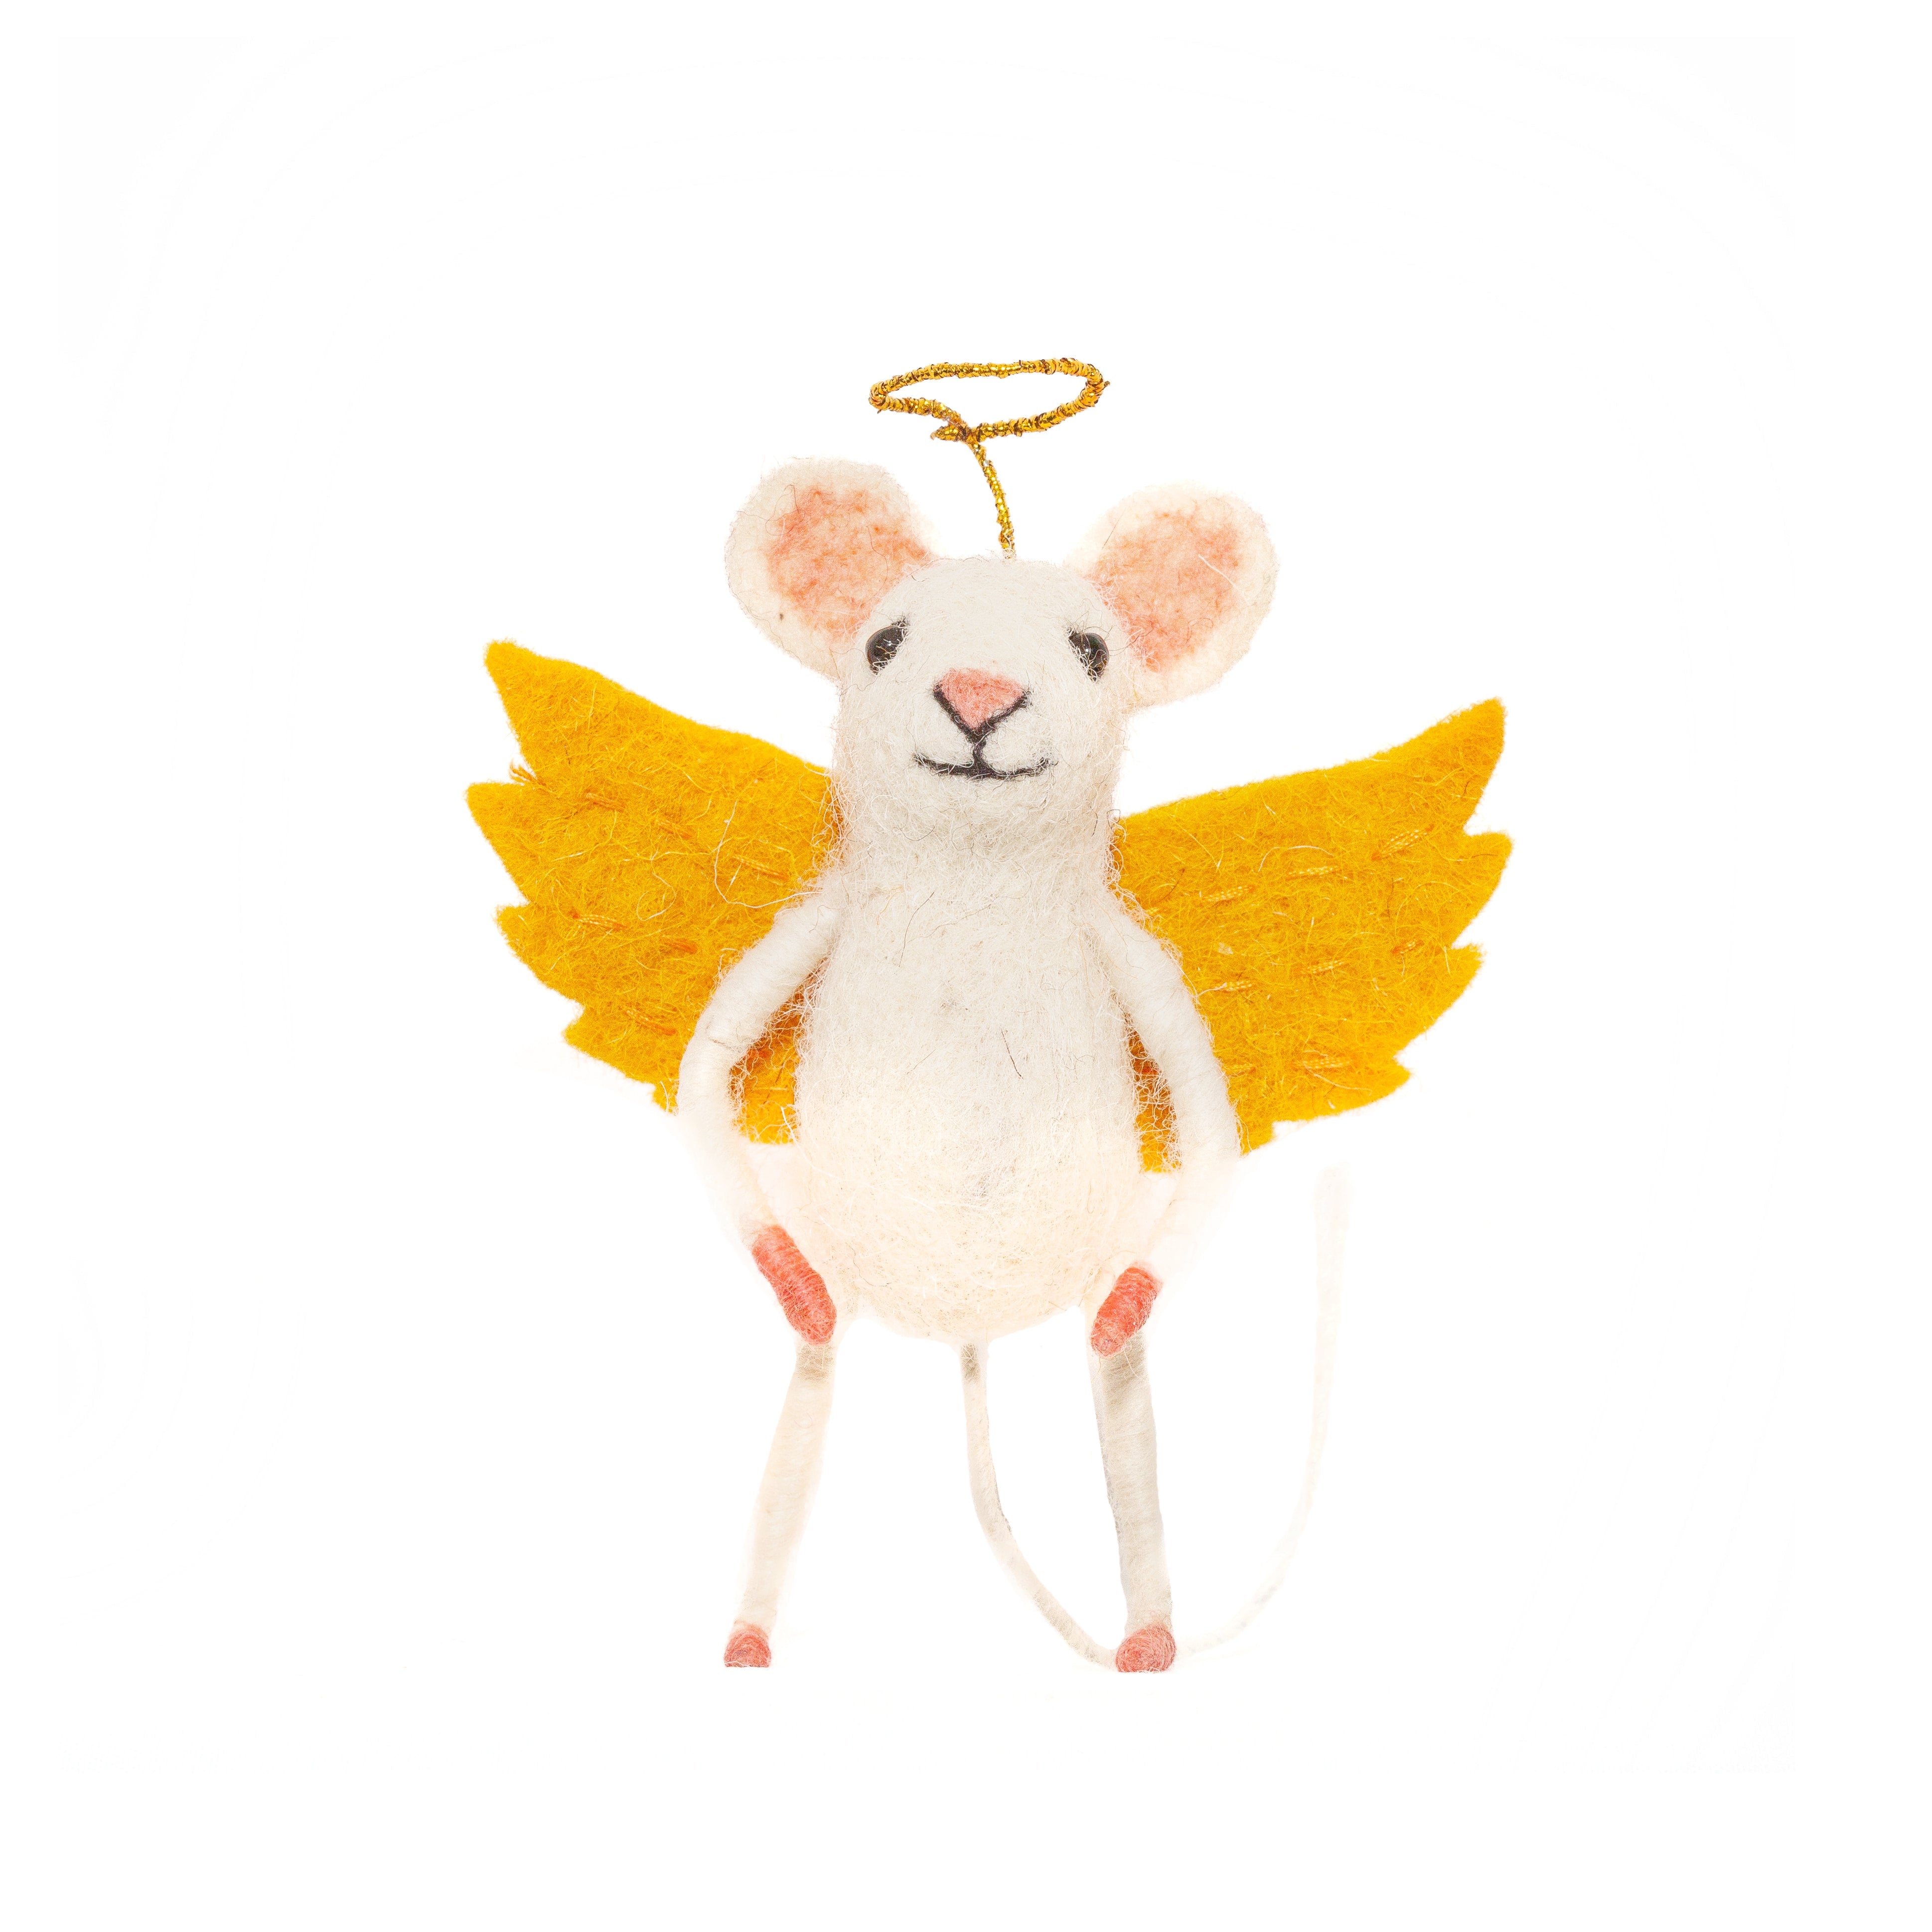 Felt Angel Gabriel Mouse